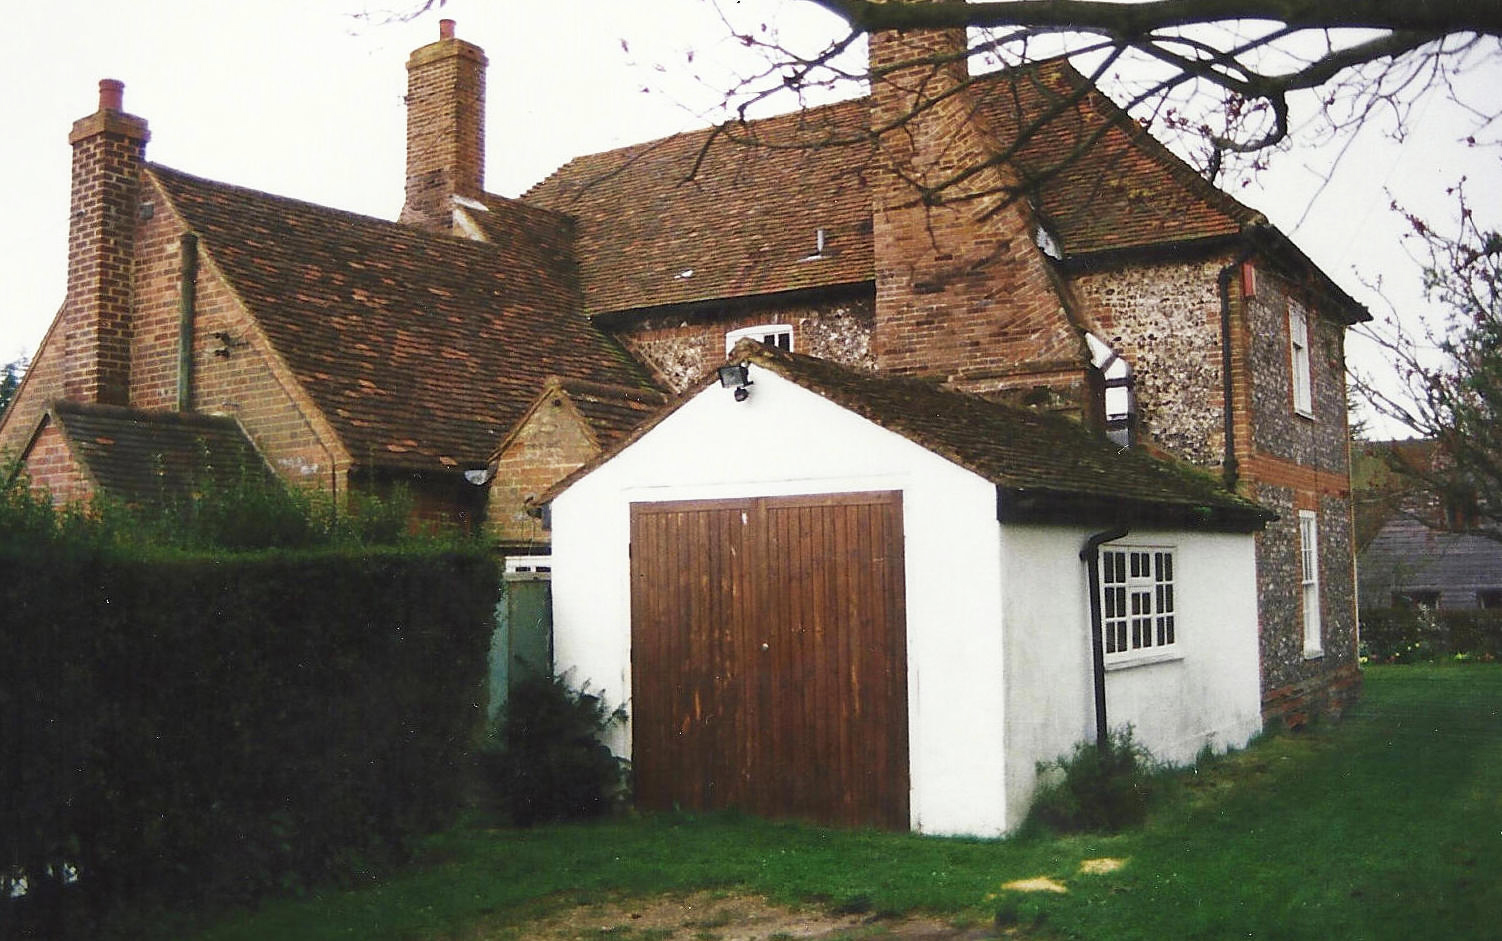 Previous Configuration Rear 2003 - Old Peppard Farmhouse - Oxfordshire Architects - Samuel Kendall Associates